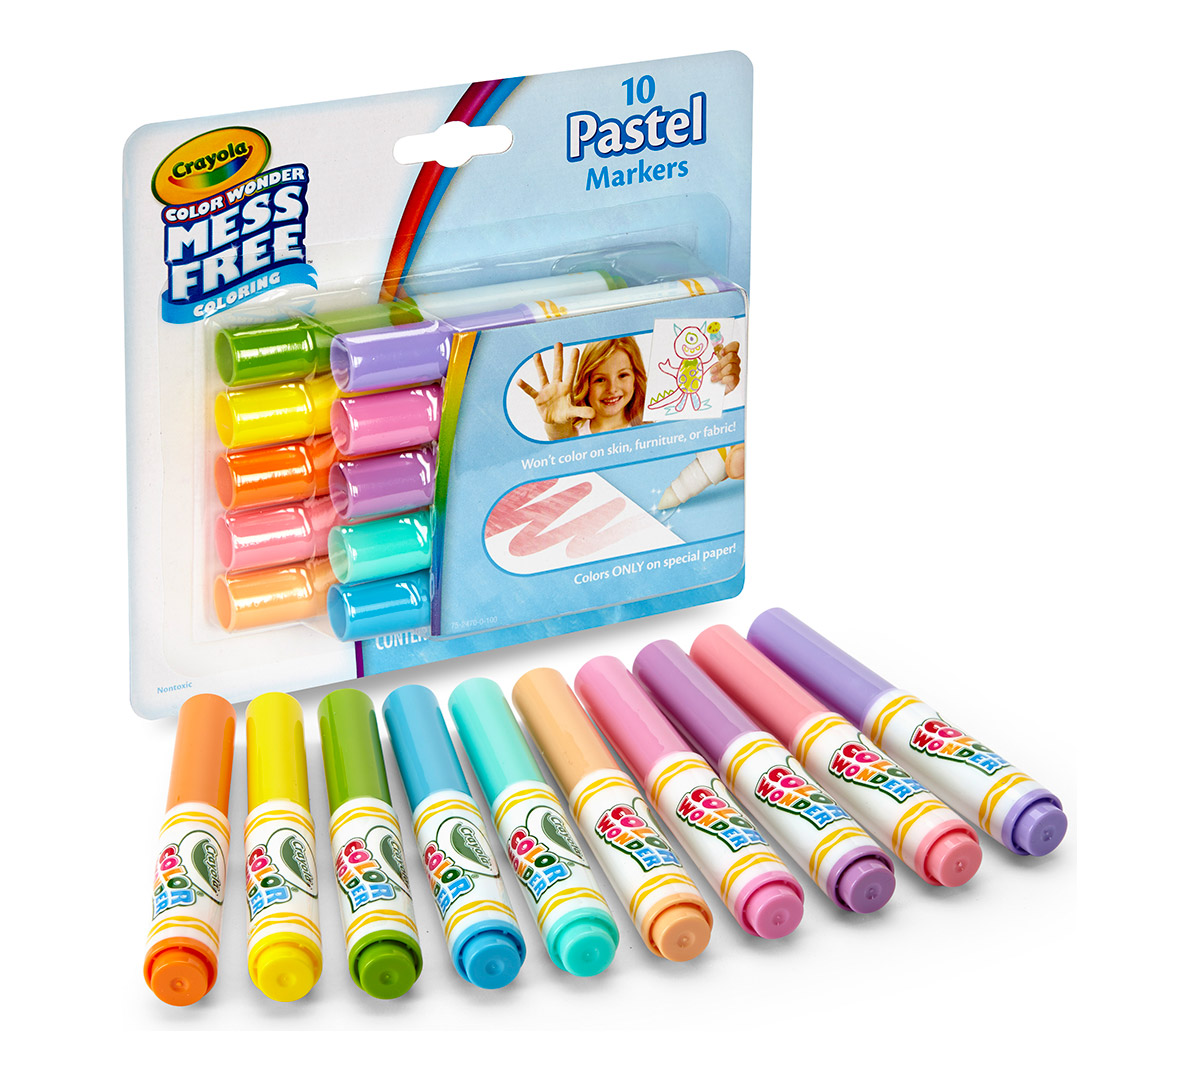 https://shop.crayola.com/on/demandware.static/-/Sites-crayola-storefront/default/dw5300cc03/images/75-2470-0-300_Color-Wonder_Mini-Markers_Pastel_10ct_H1.jpg